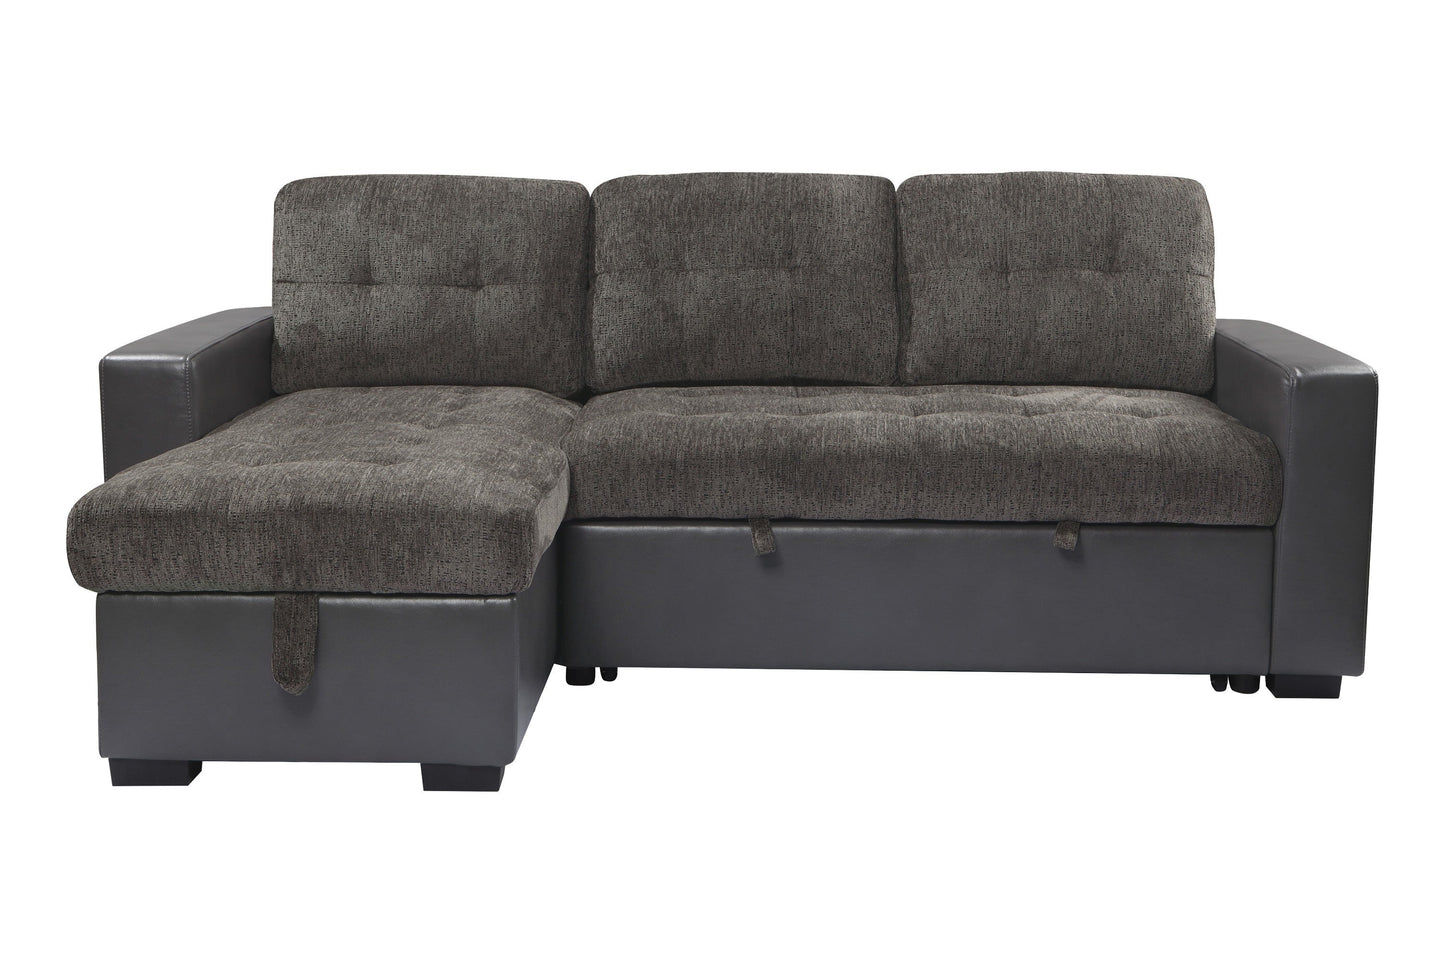 Swallowtail Brown Reversible Storage Sleeper Sofa Chaise